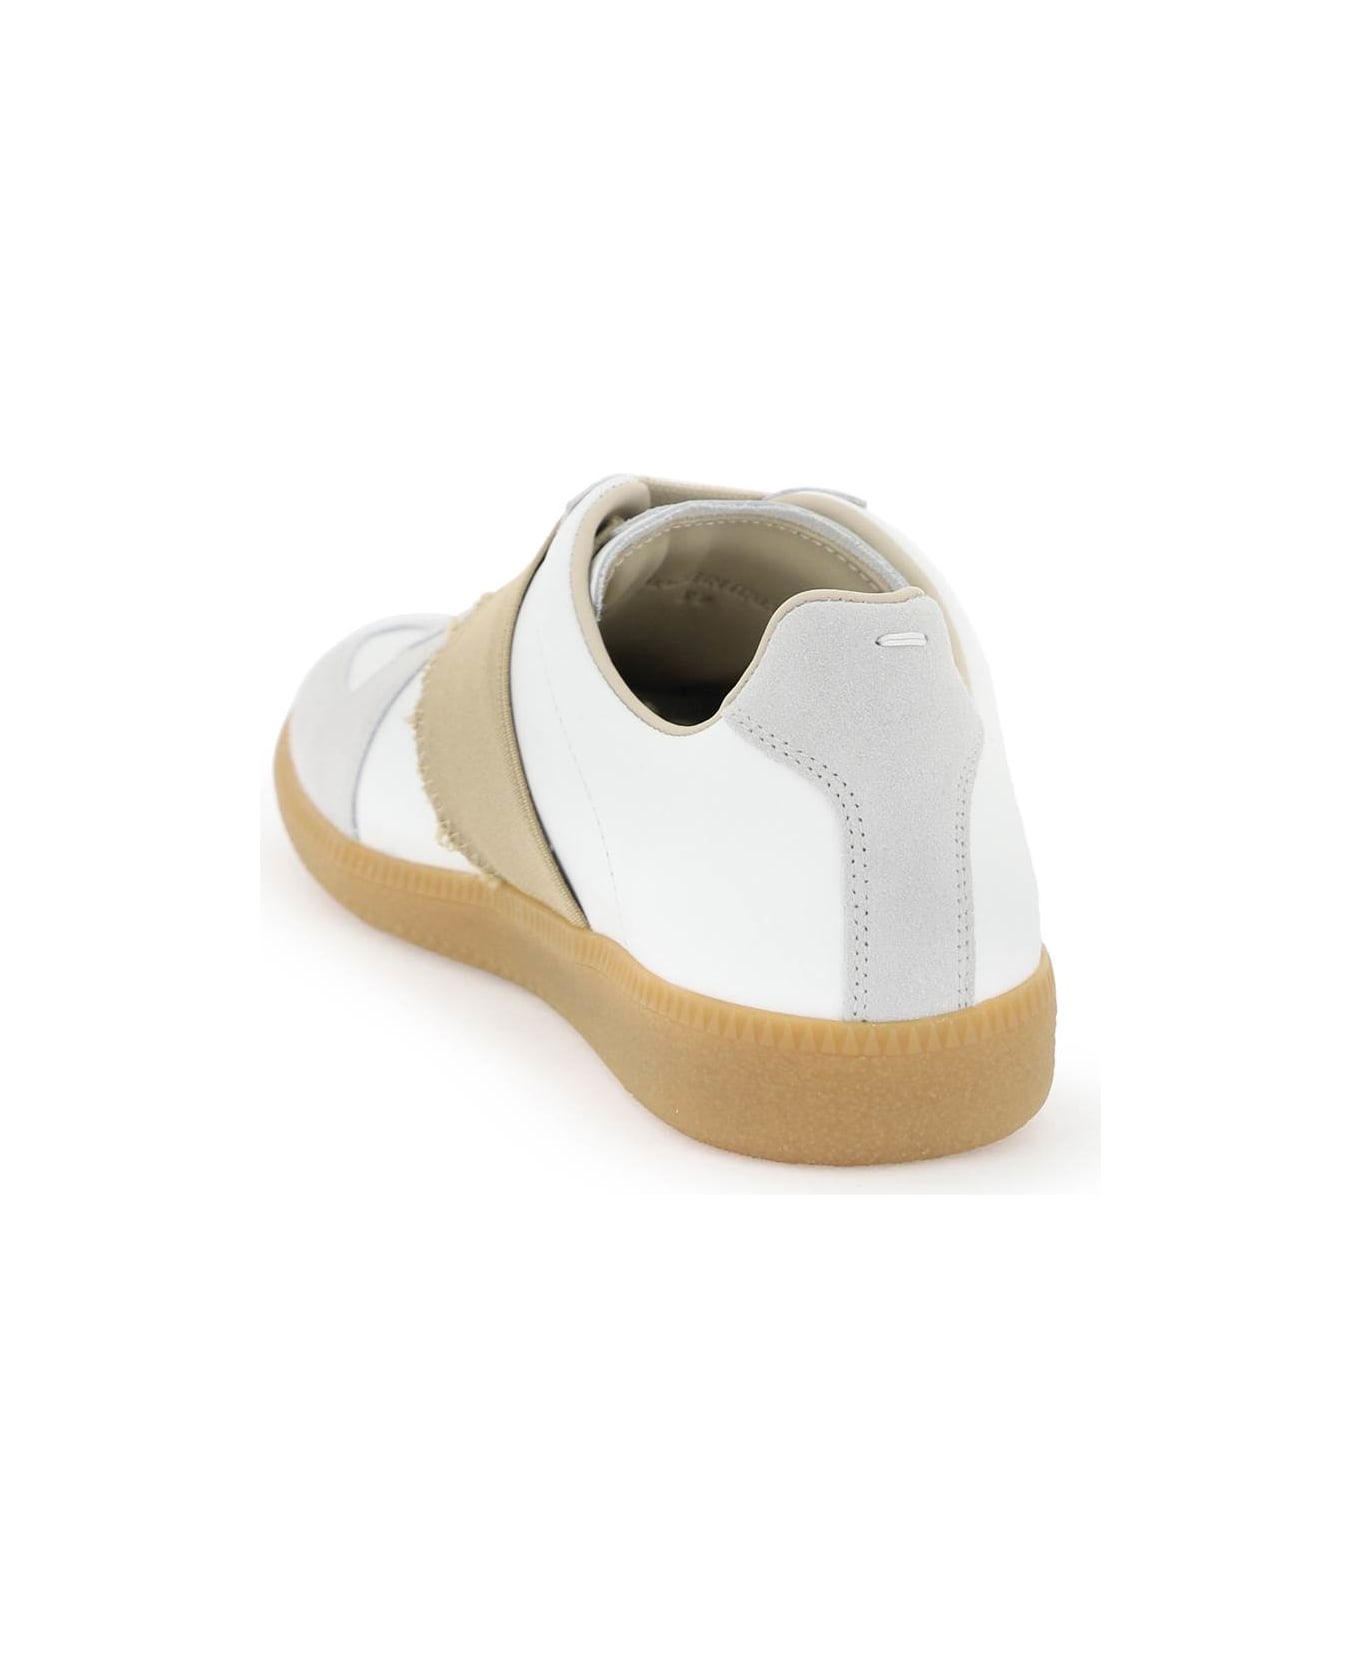 Maison Margiela Replica Sneakers With Elastic Band - WHITE NUDE (White)